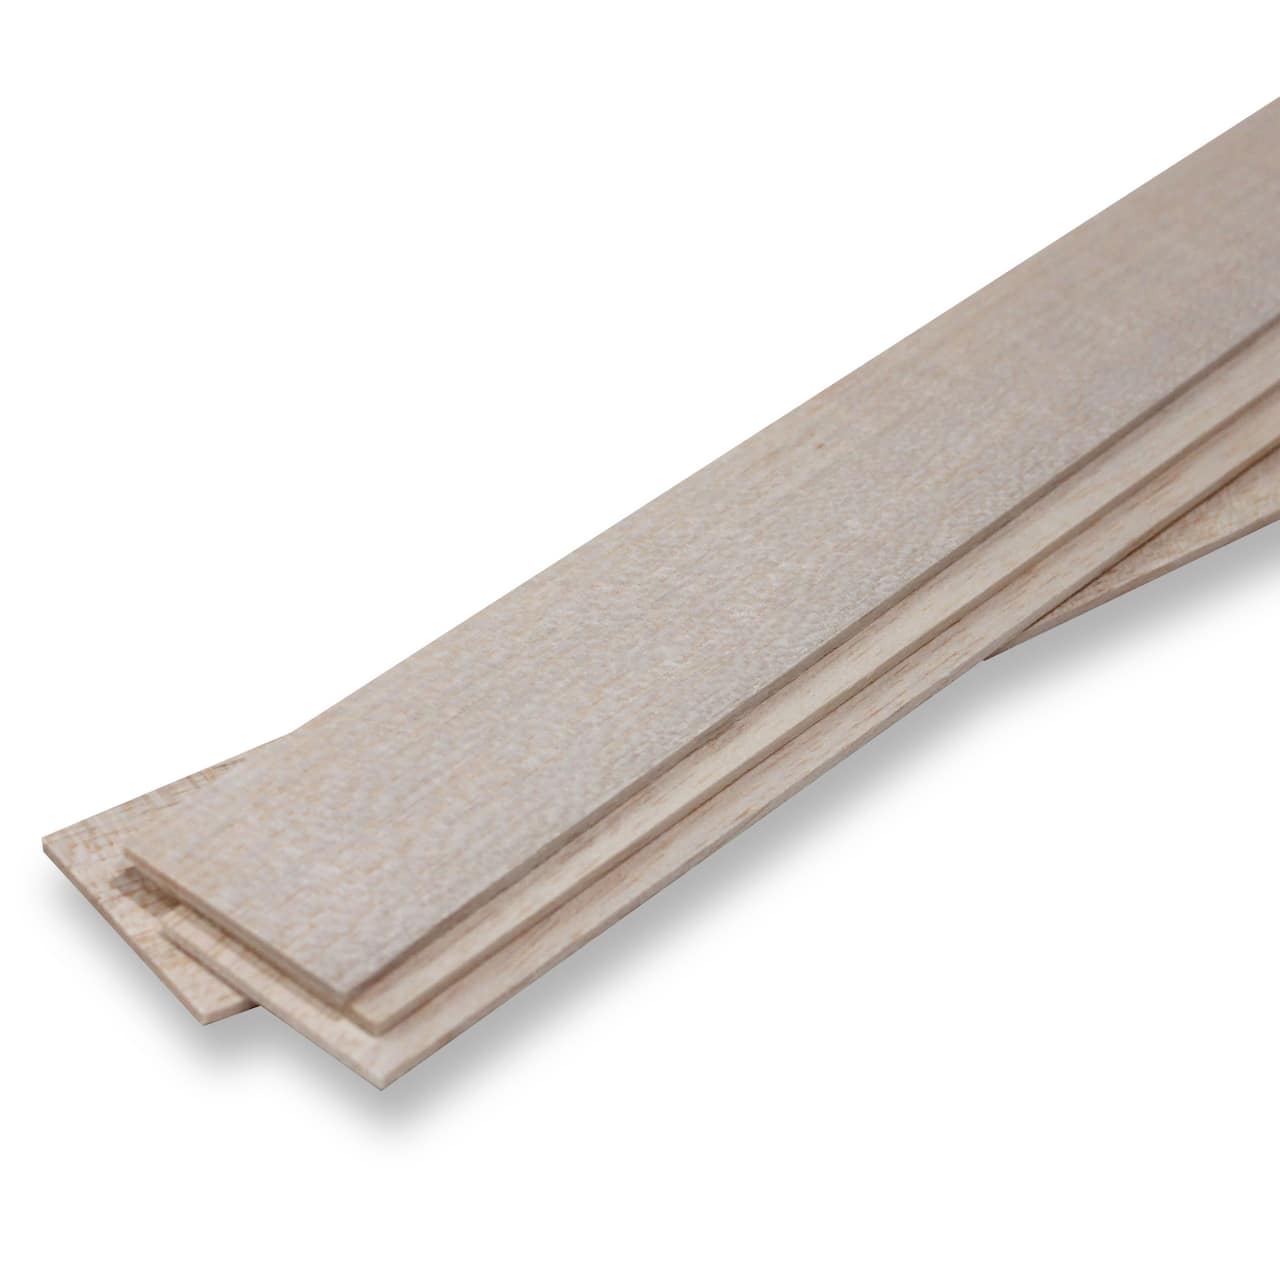 1/8 x 2 x 36 Balsa Wood Slats, 4ct. by Make Market®